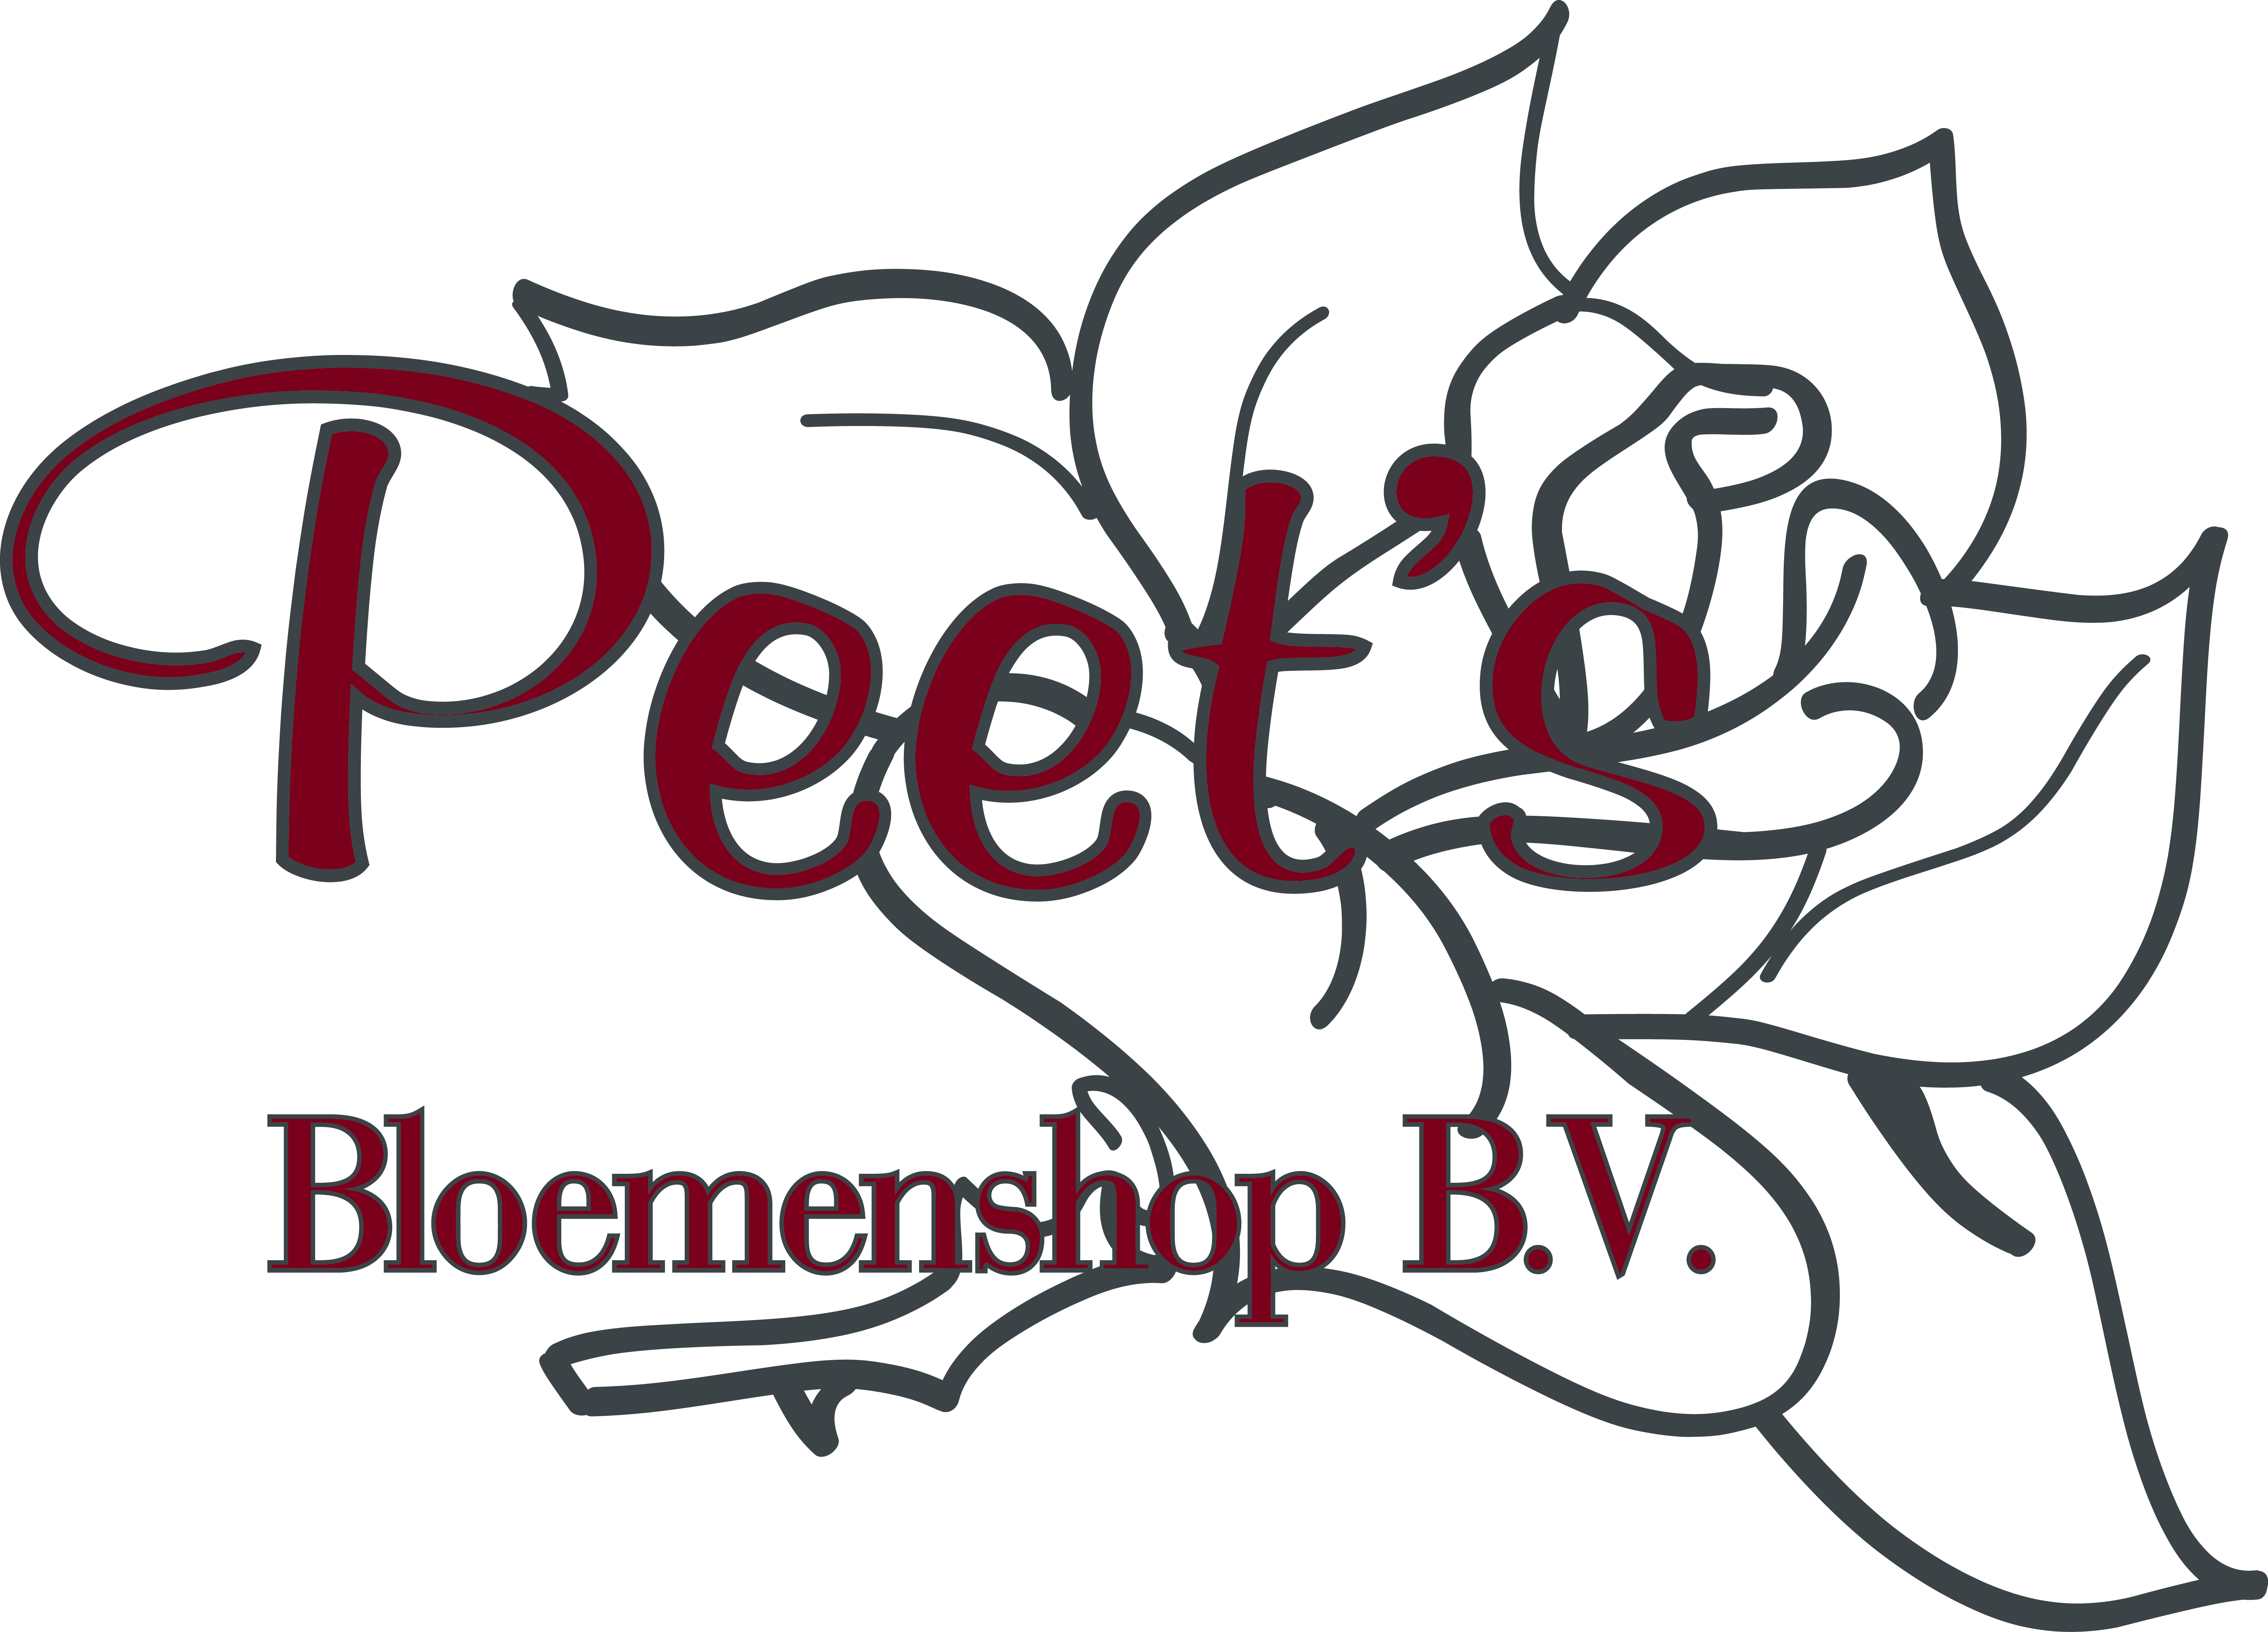 Peet's bloemenshop